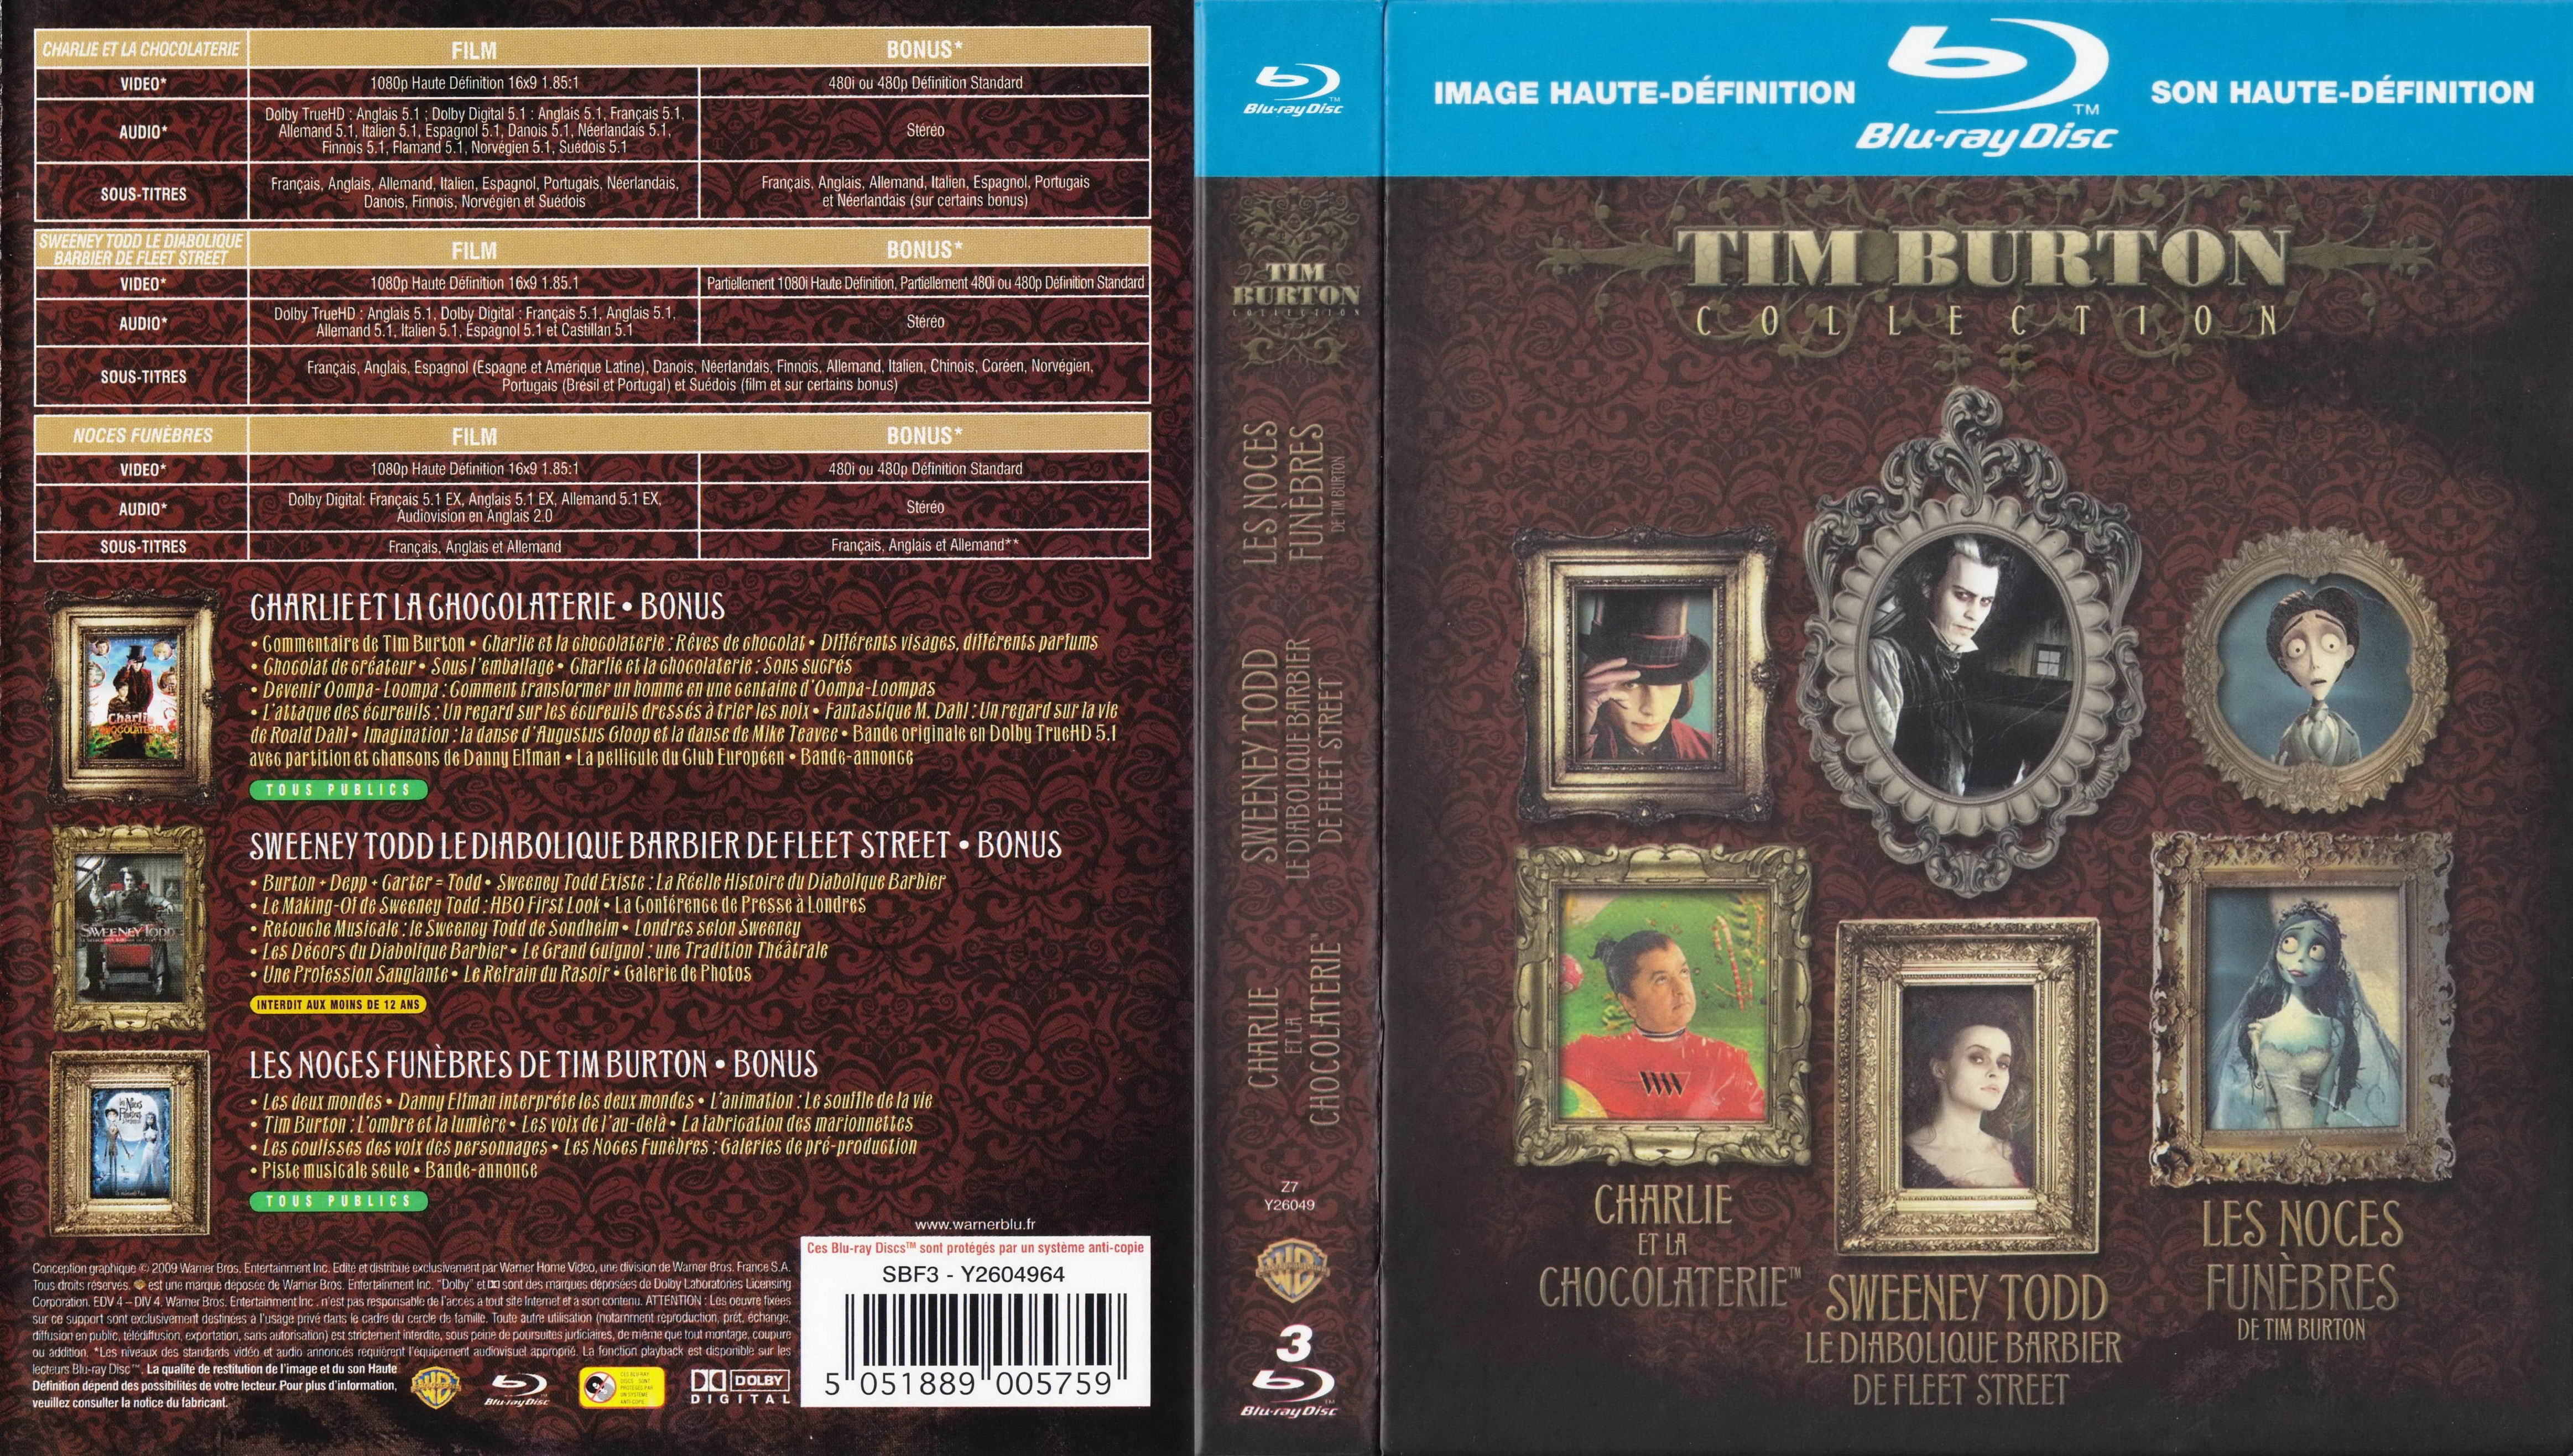 Jaquette DVD Tim Burton collection COFFRET (BLU-RAY) V2